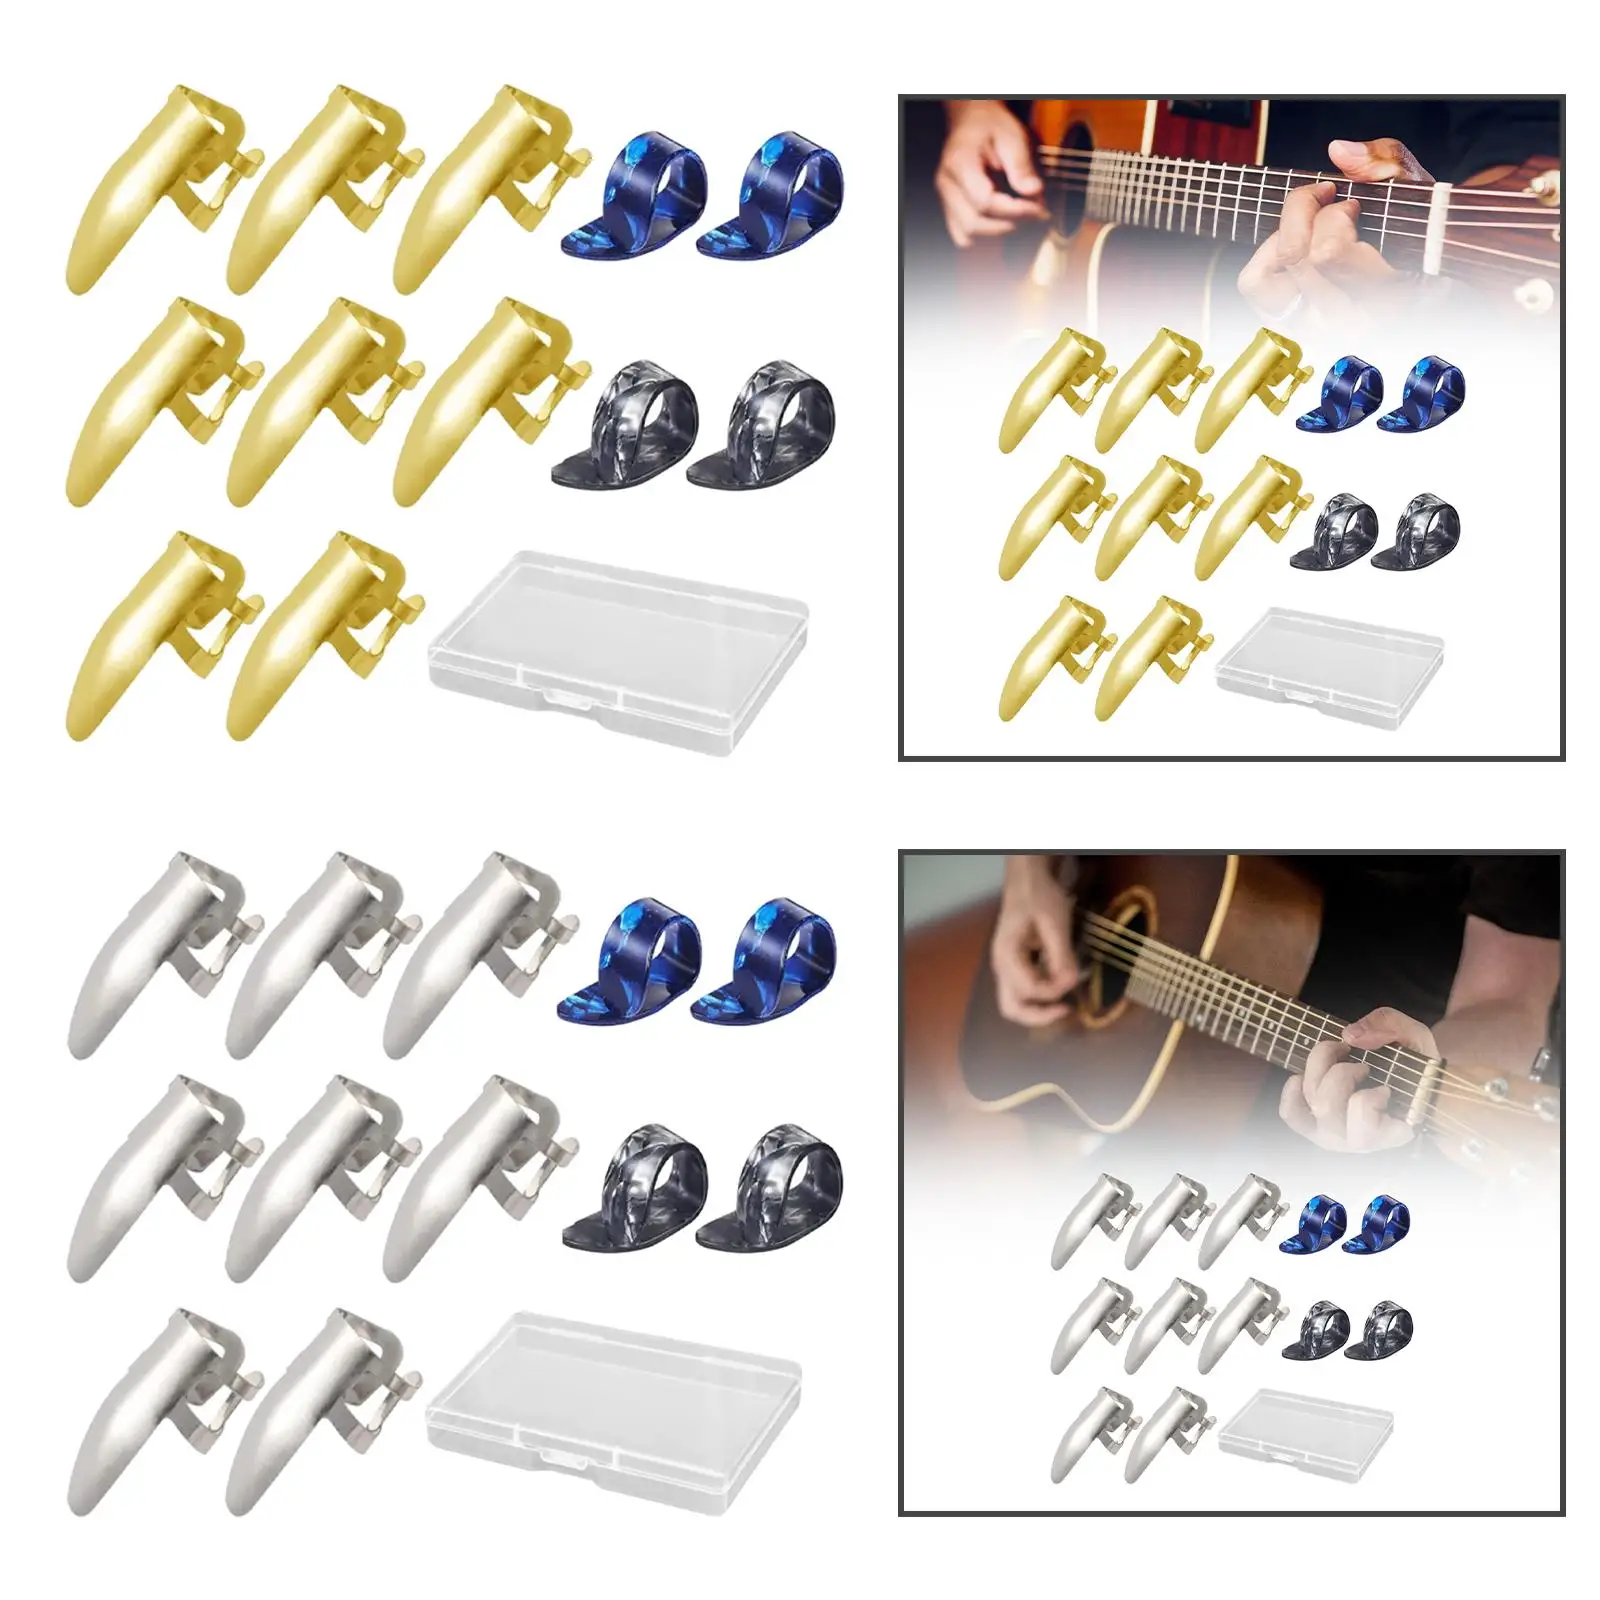 Guitar Picks Guitar Accessories Parts Guitar Replacement Parts Steel Finger Picks Set Thumb Finger pick Finger Pick